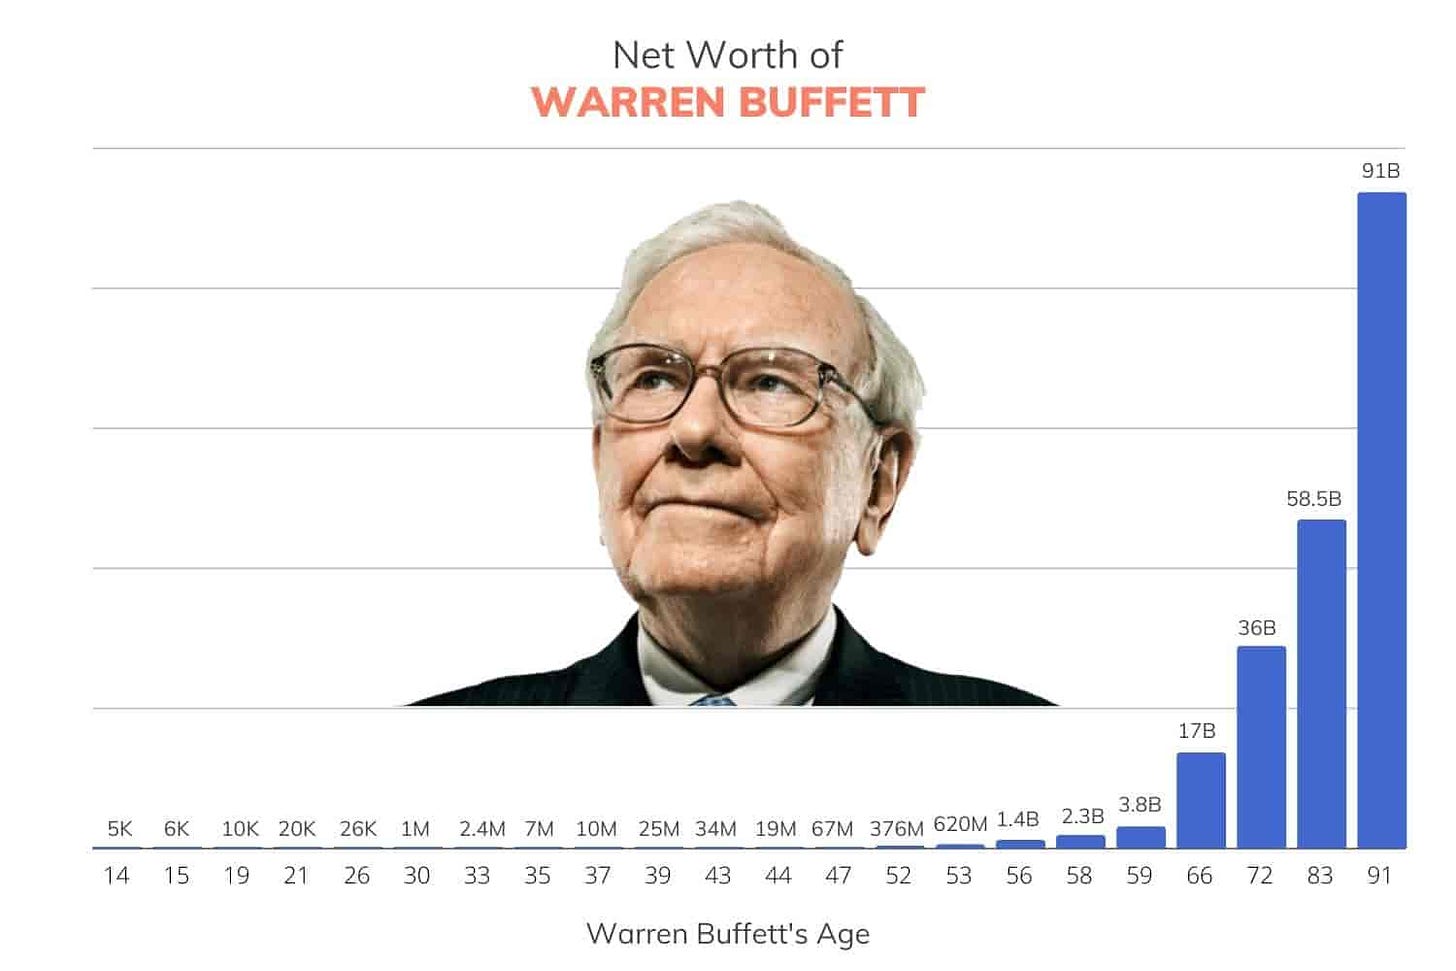 Warren Buffett's Net Worth Over the Years